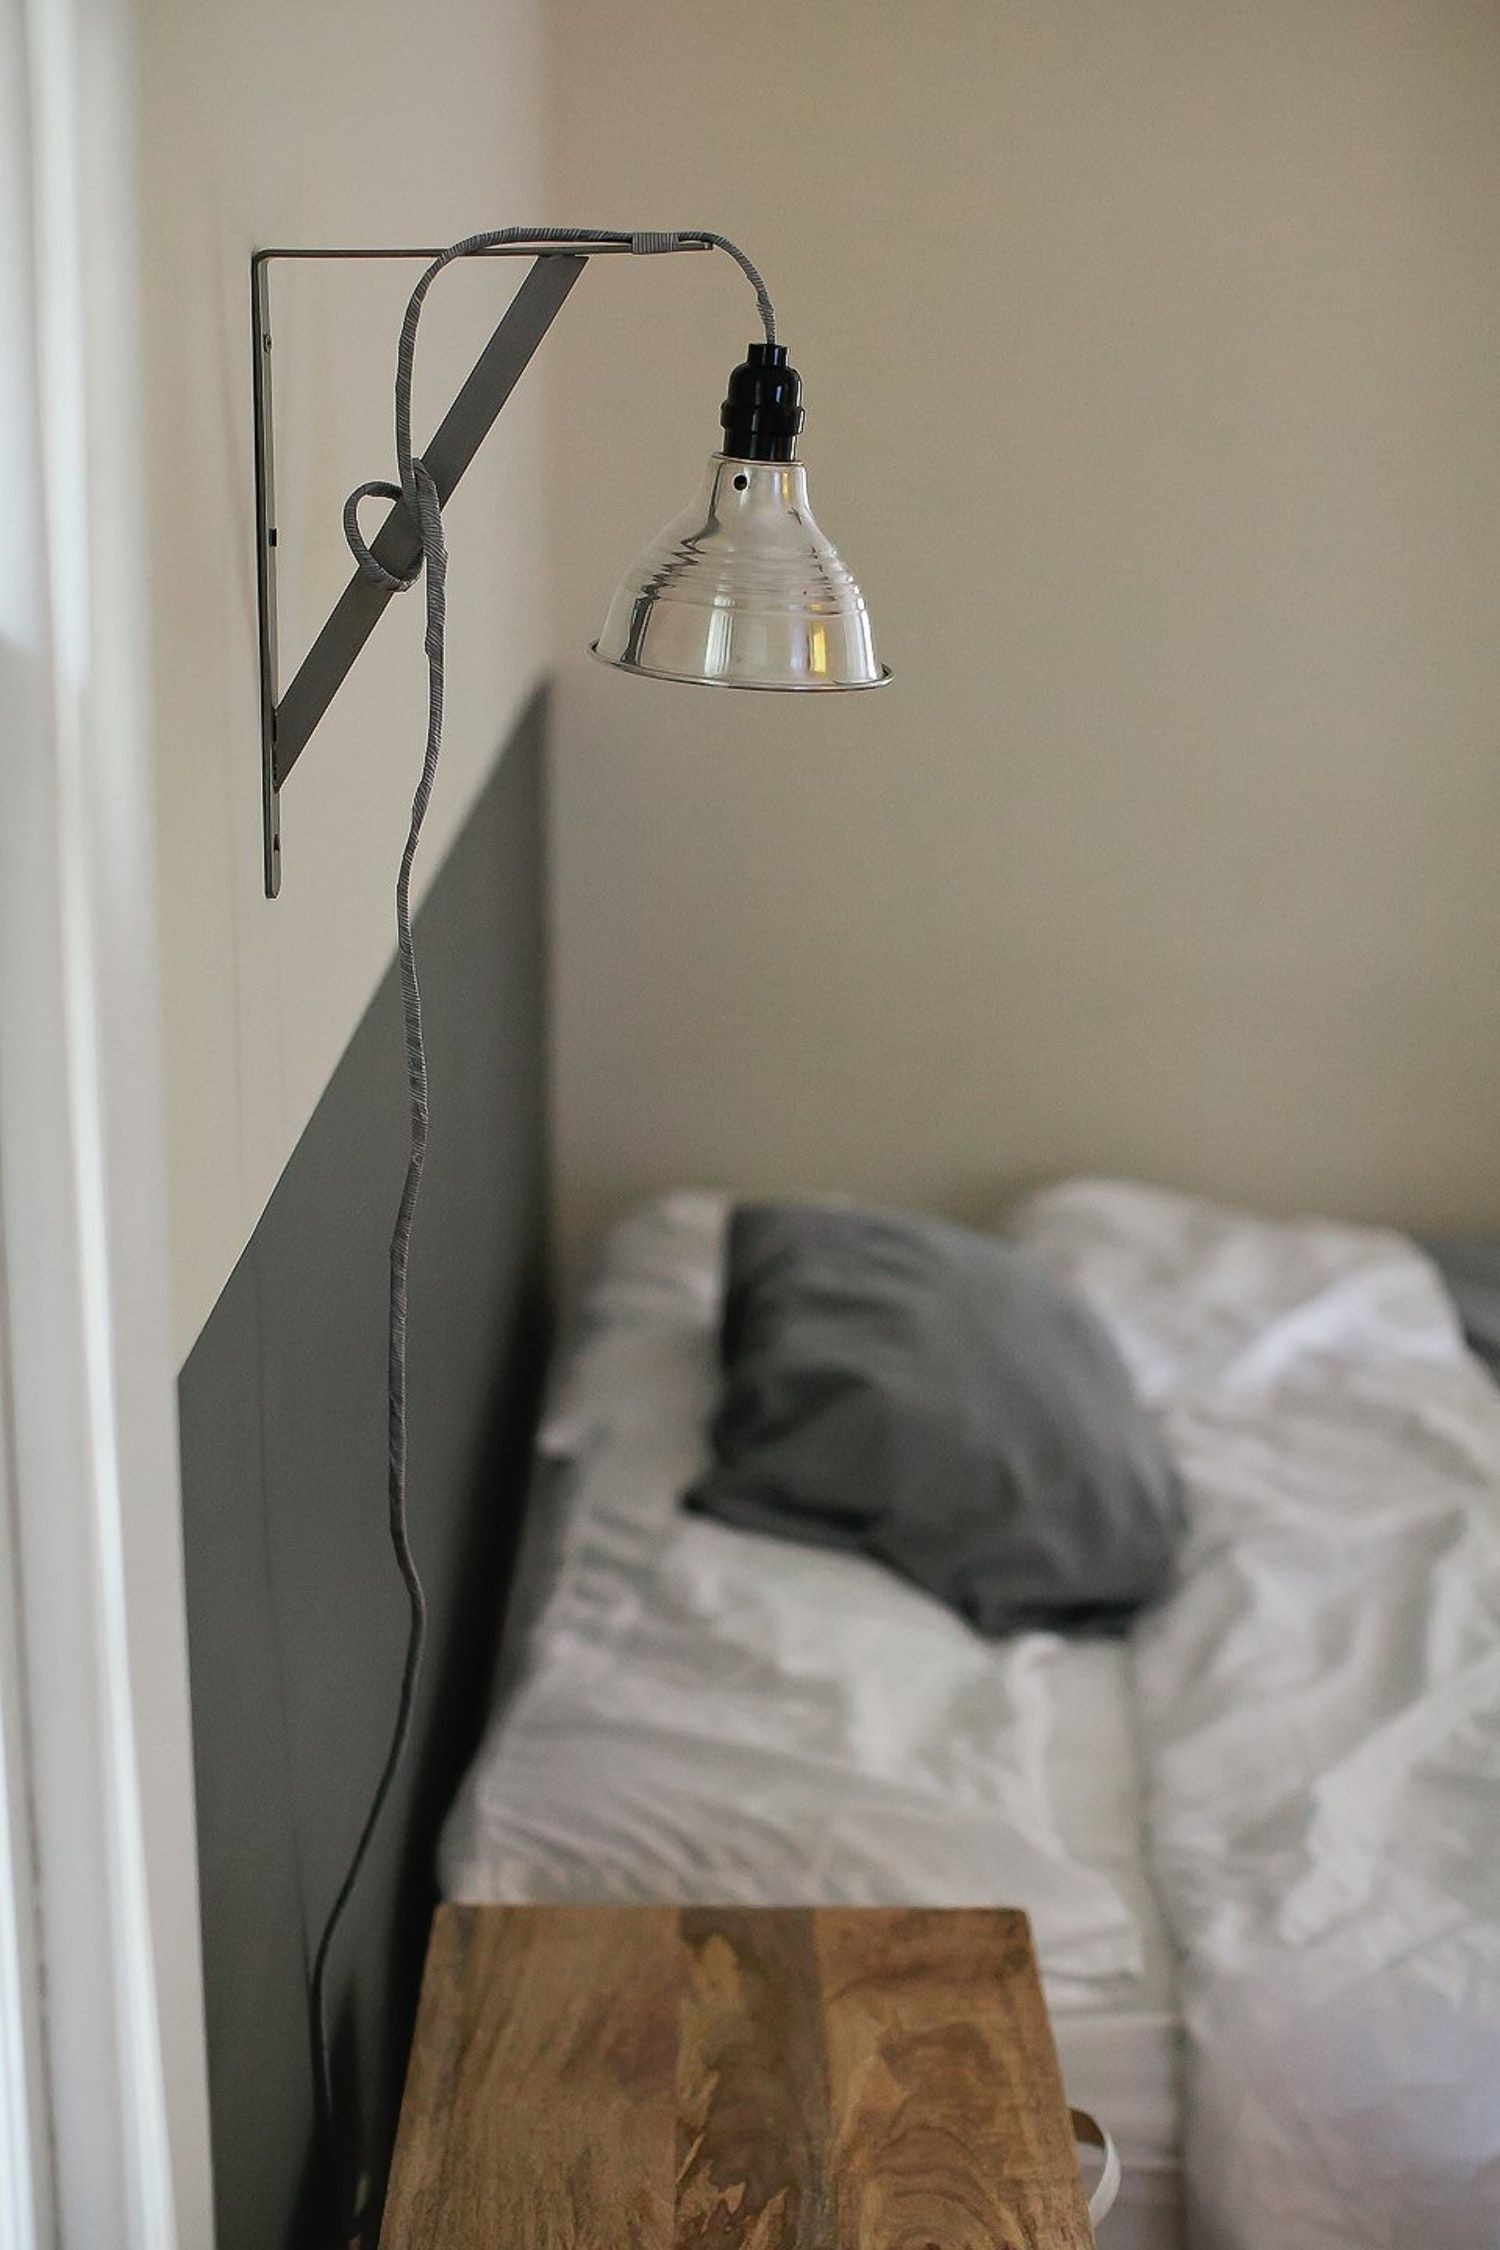 Bedside wall mounted lights